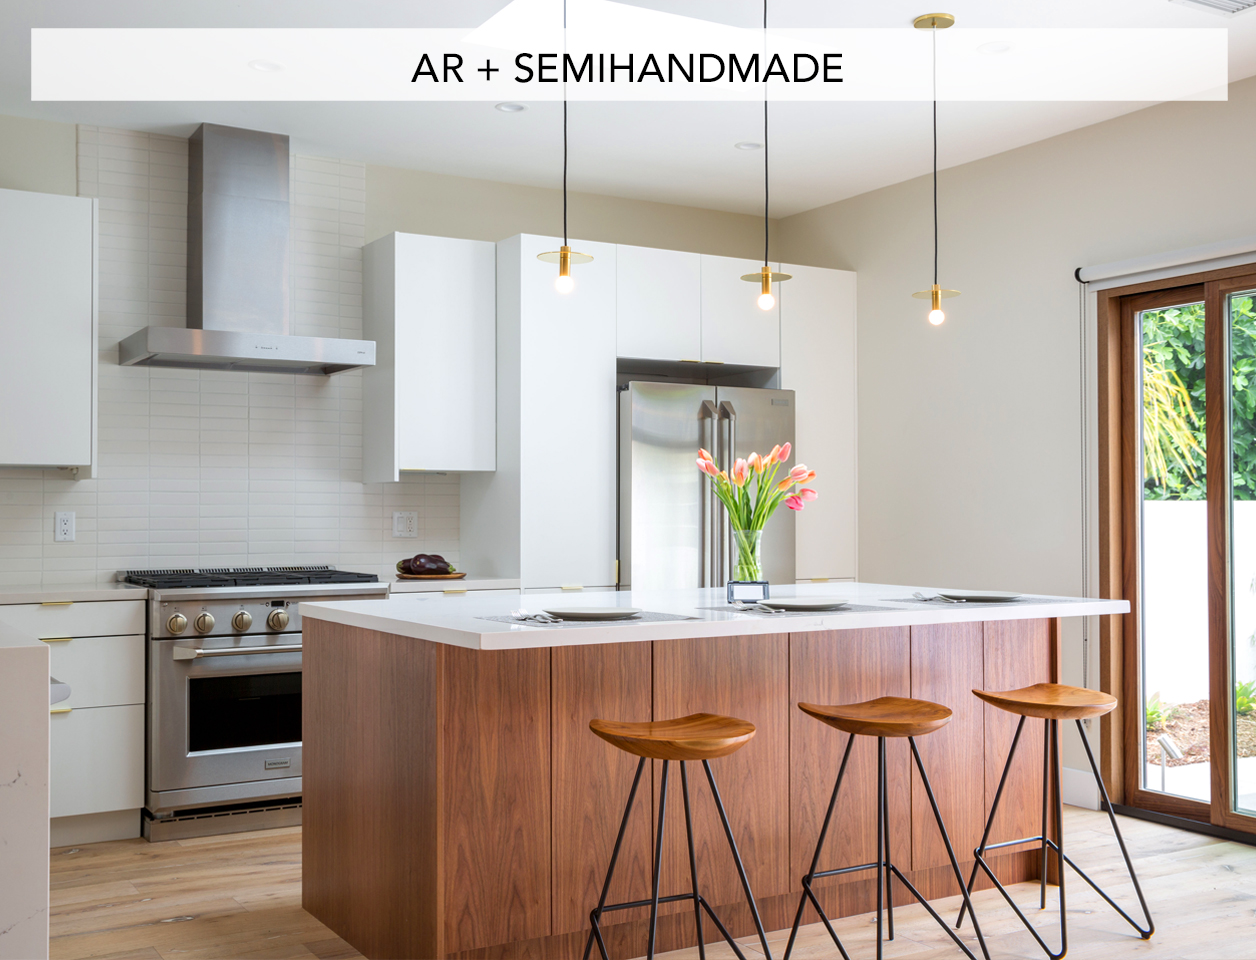 IKEA Kitchen cabinets, after market doors, custom doors from Semihand made